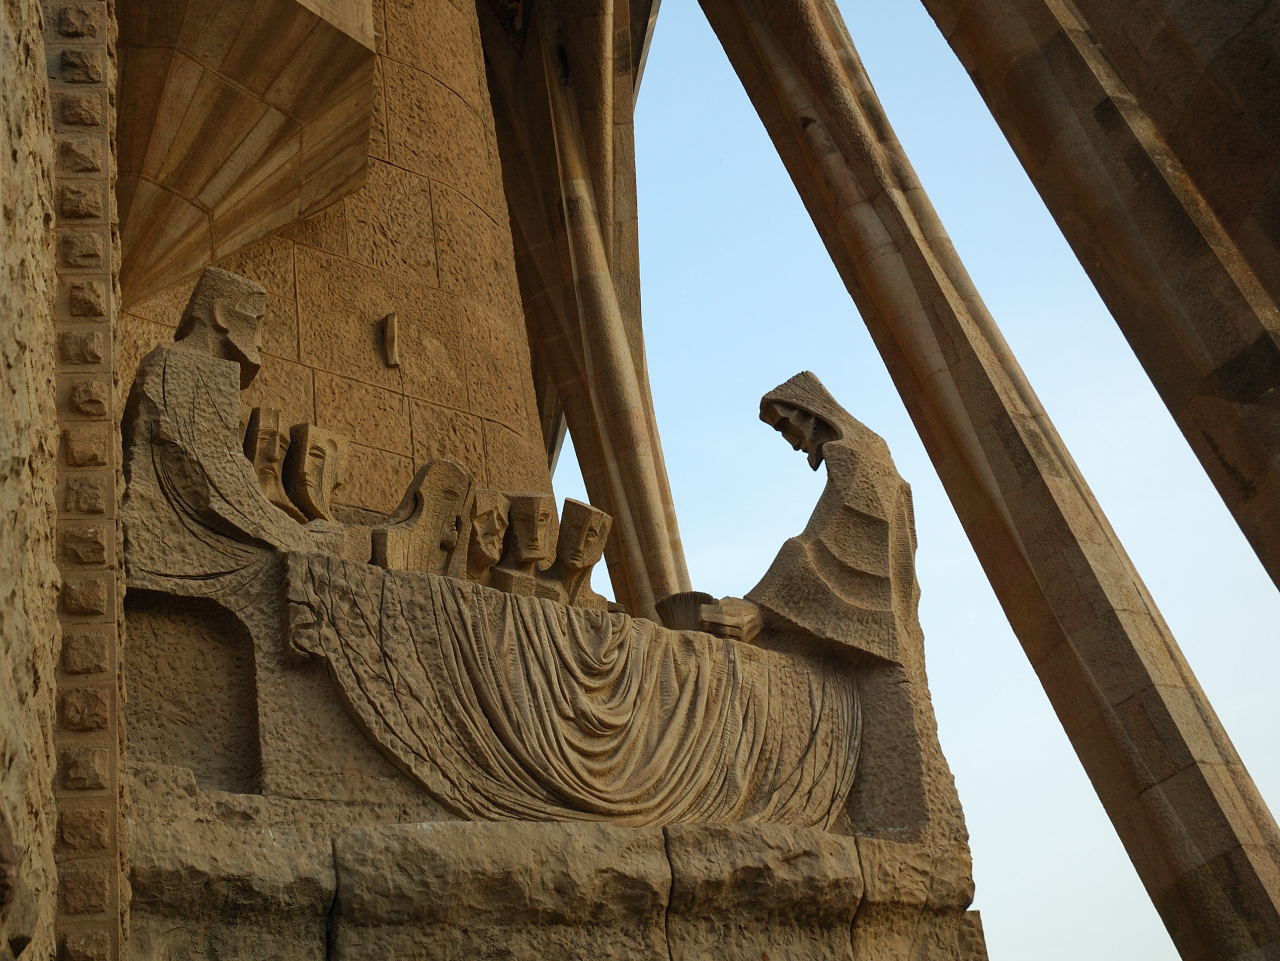 Passion Façade at Sagrada Familia: The Last Supper